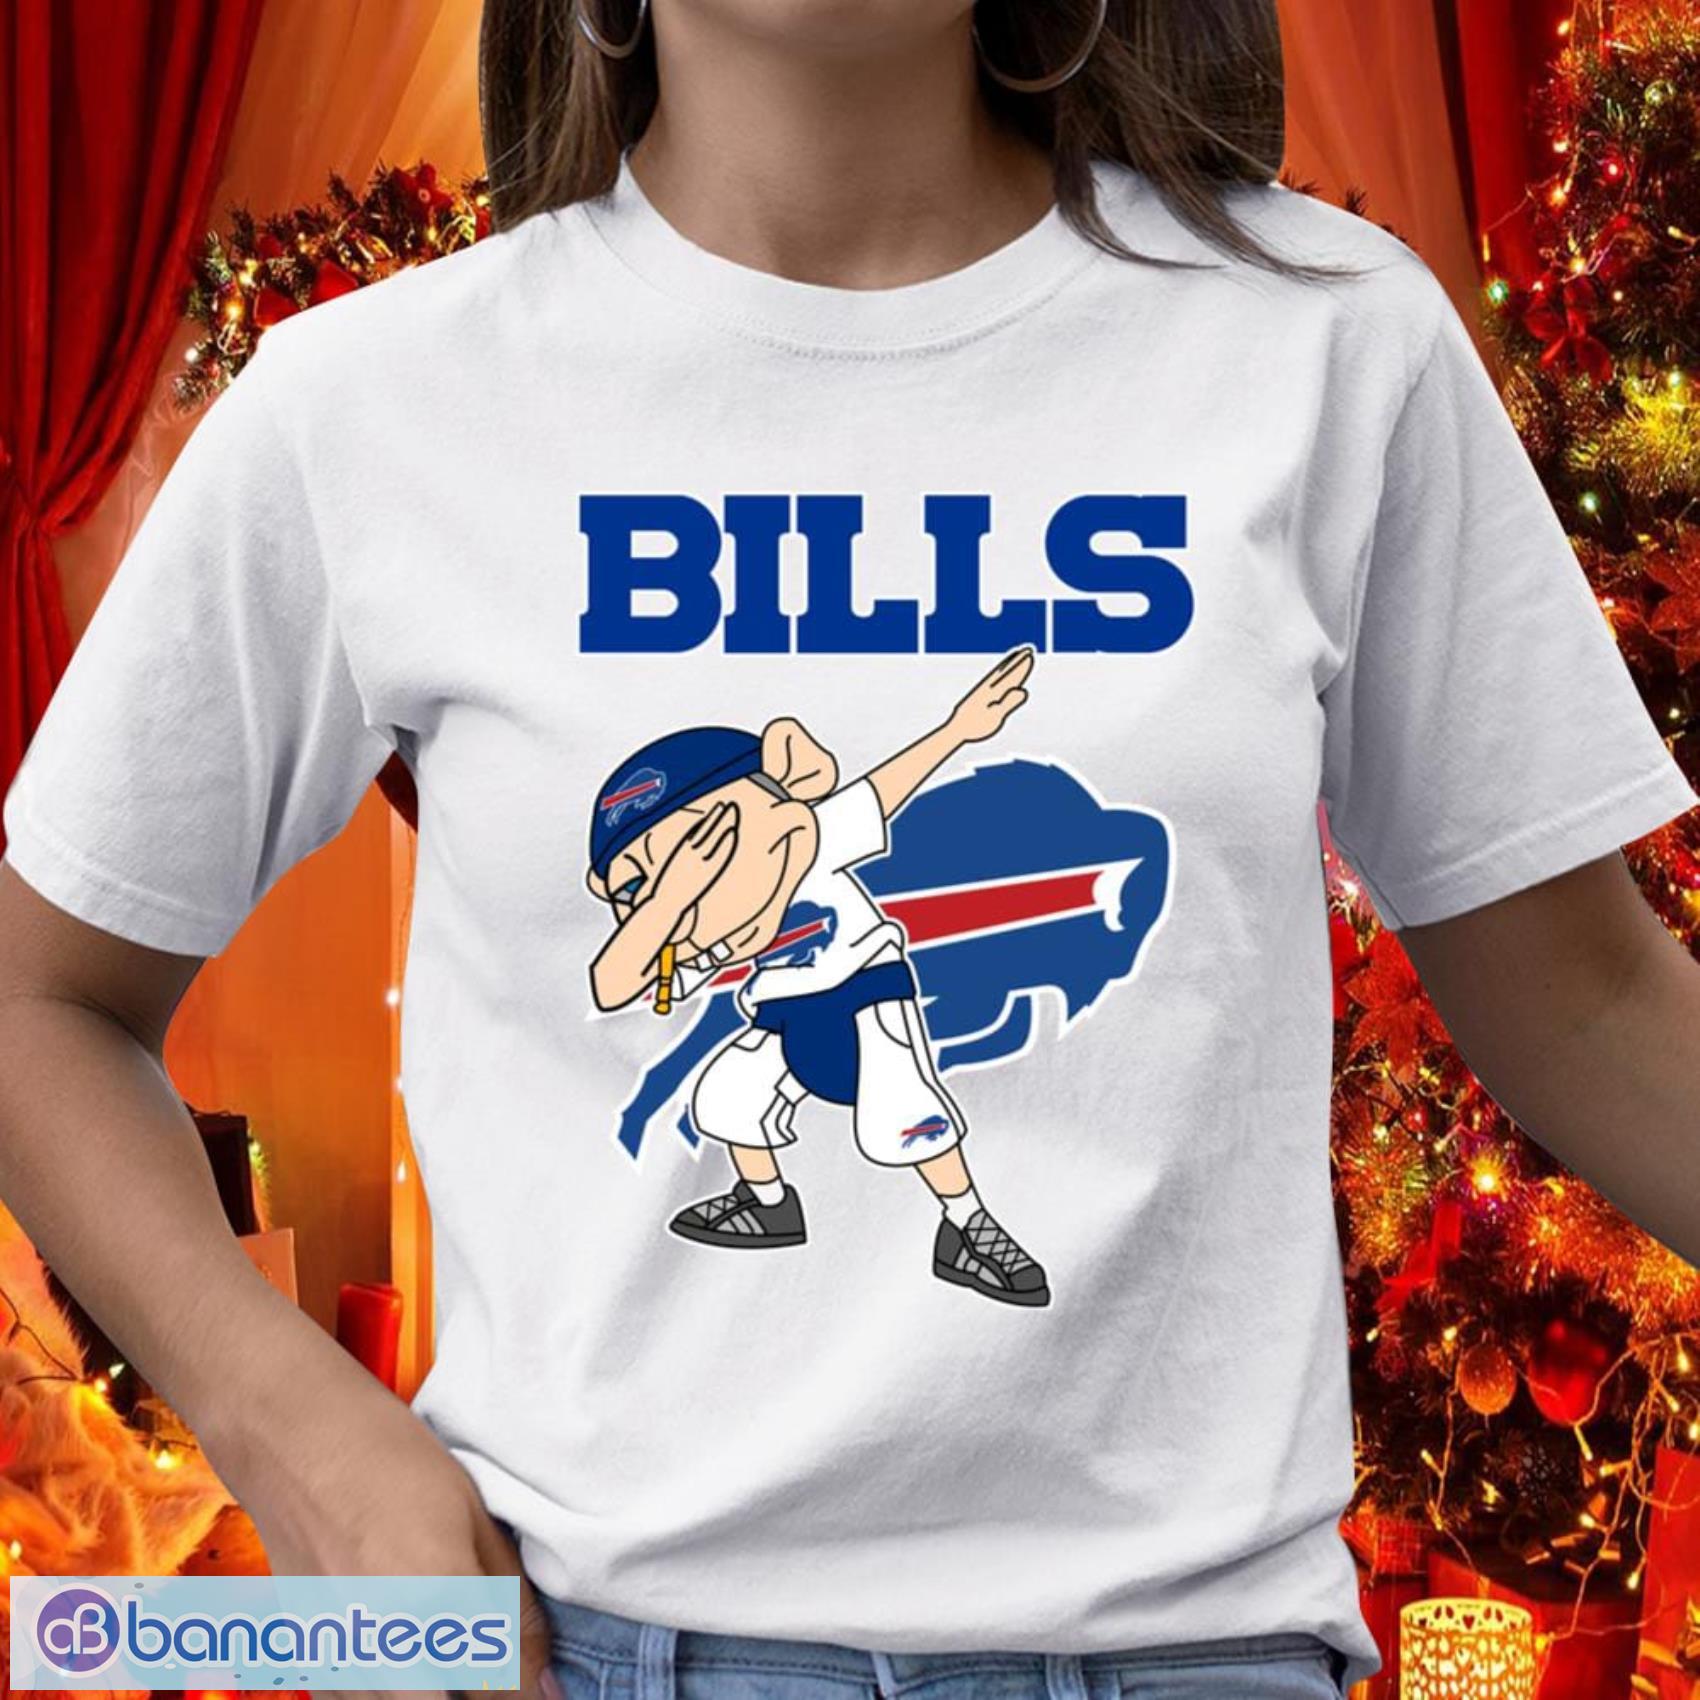 Buffalo Bills NFL Football Gift Fr Fans Jeffy Dabbing Sports T Shirt - Buffalo Bills NFL Football Jeffy Dabbing Sports T Shirt_1